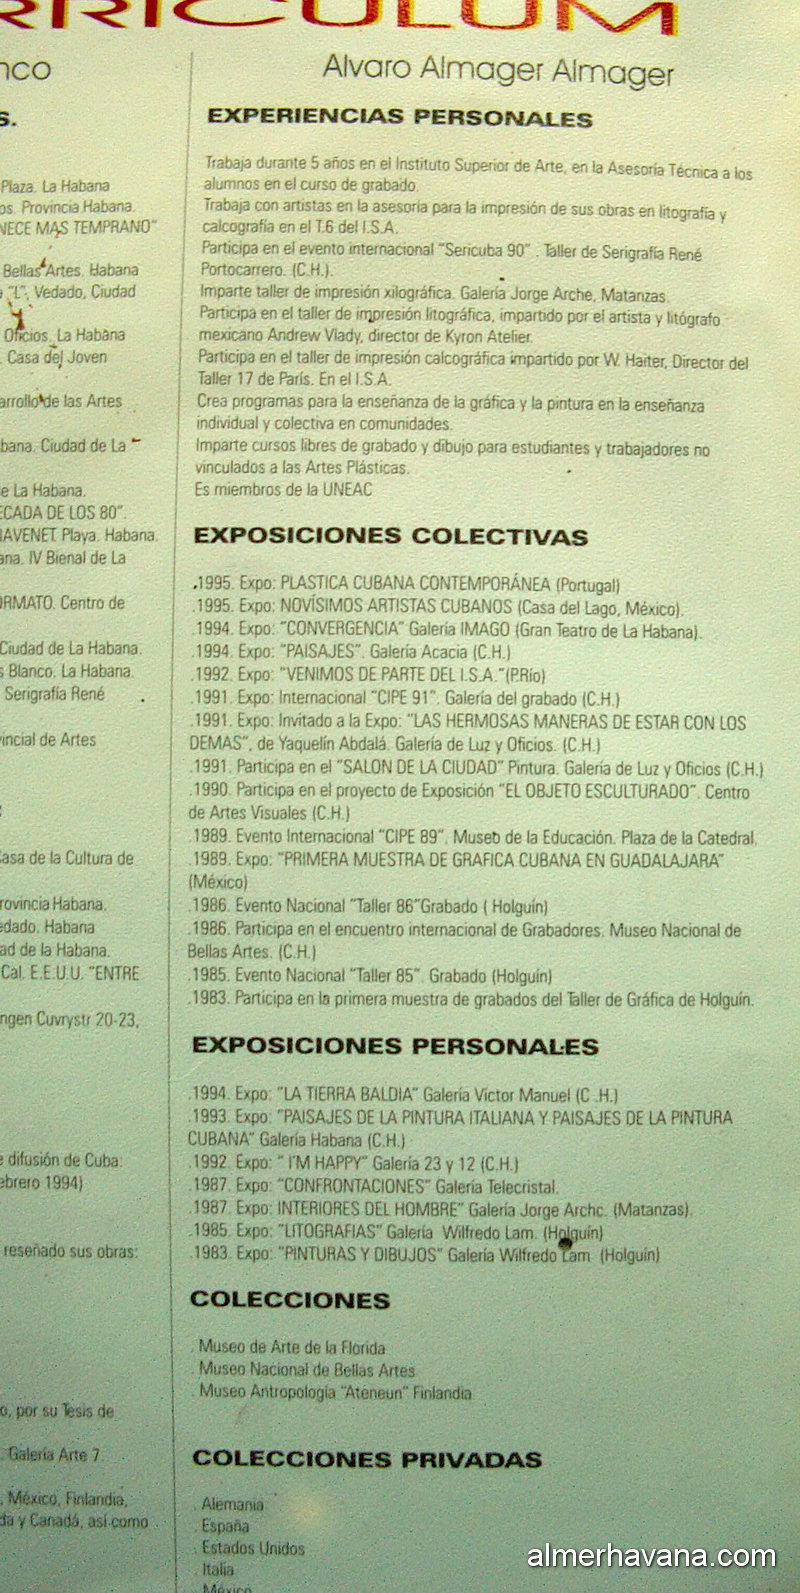 Expo Duro Cuba International Press Center